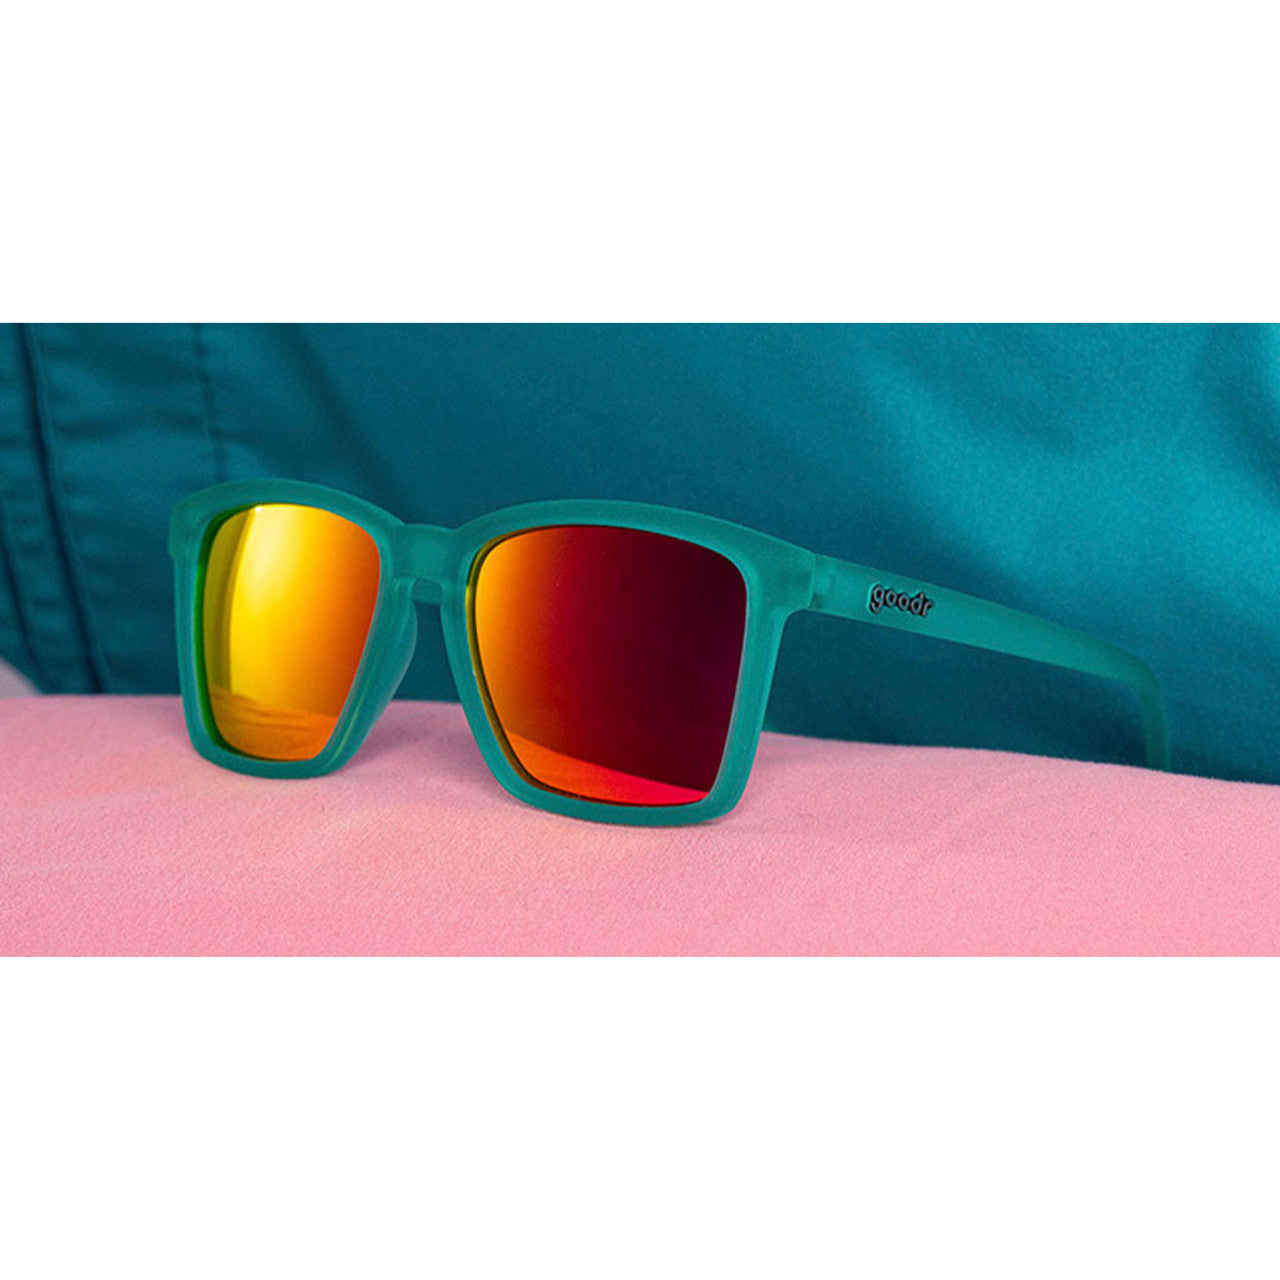 Goodr LFG sunglasses- Short With Benefits